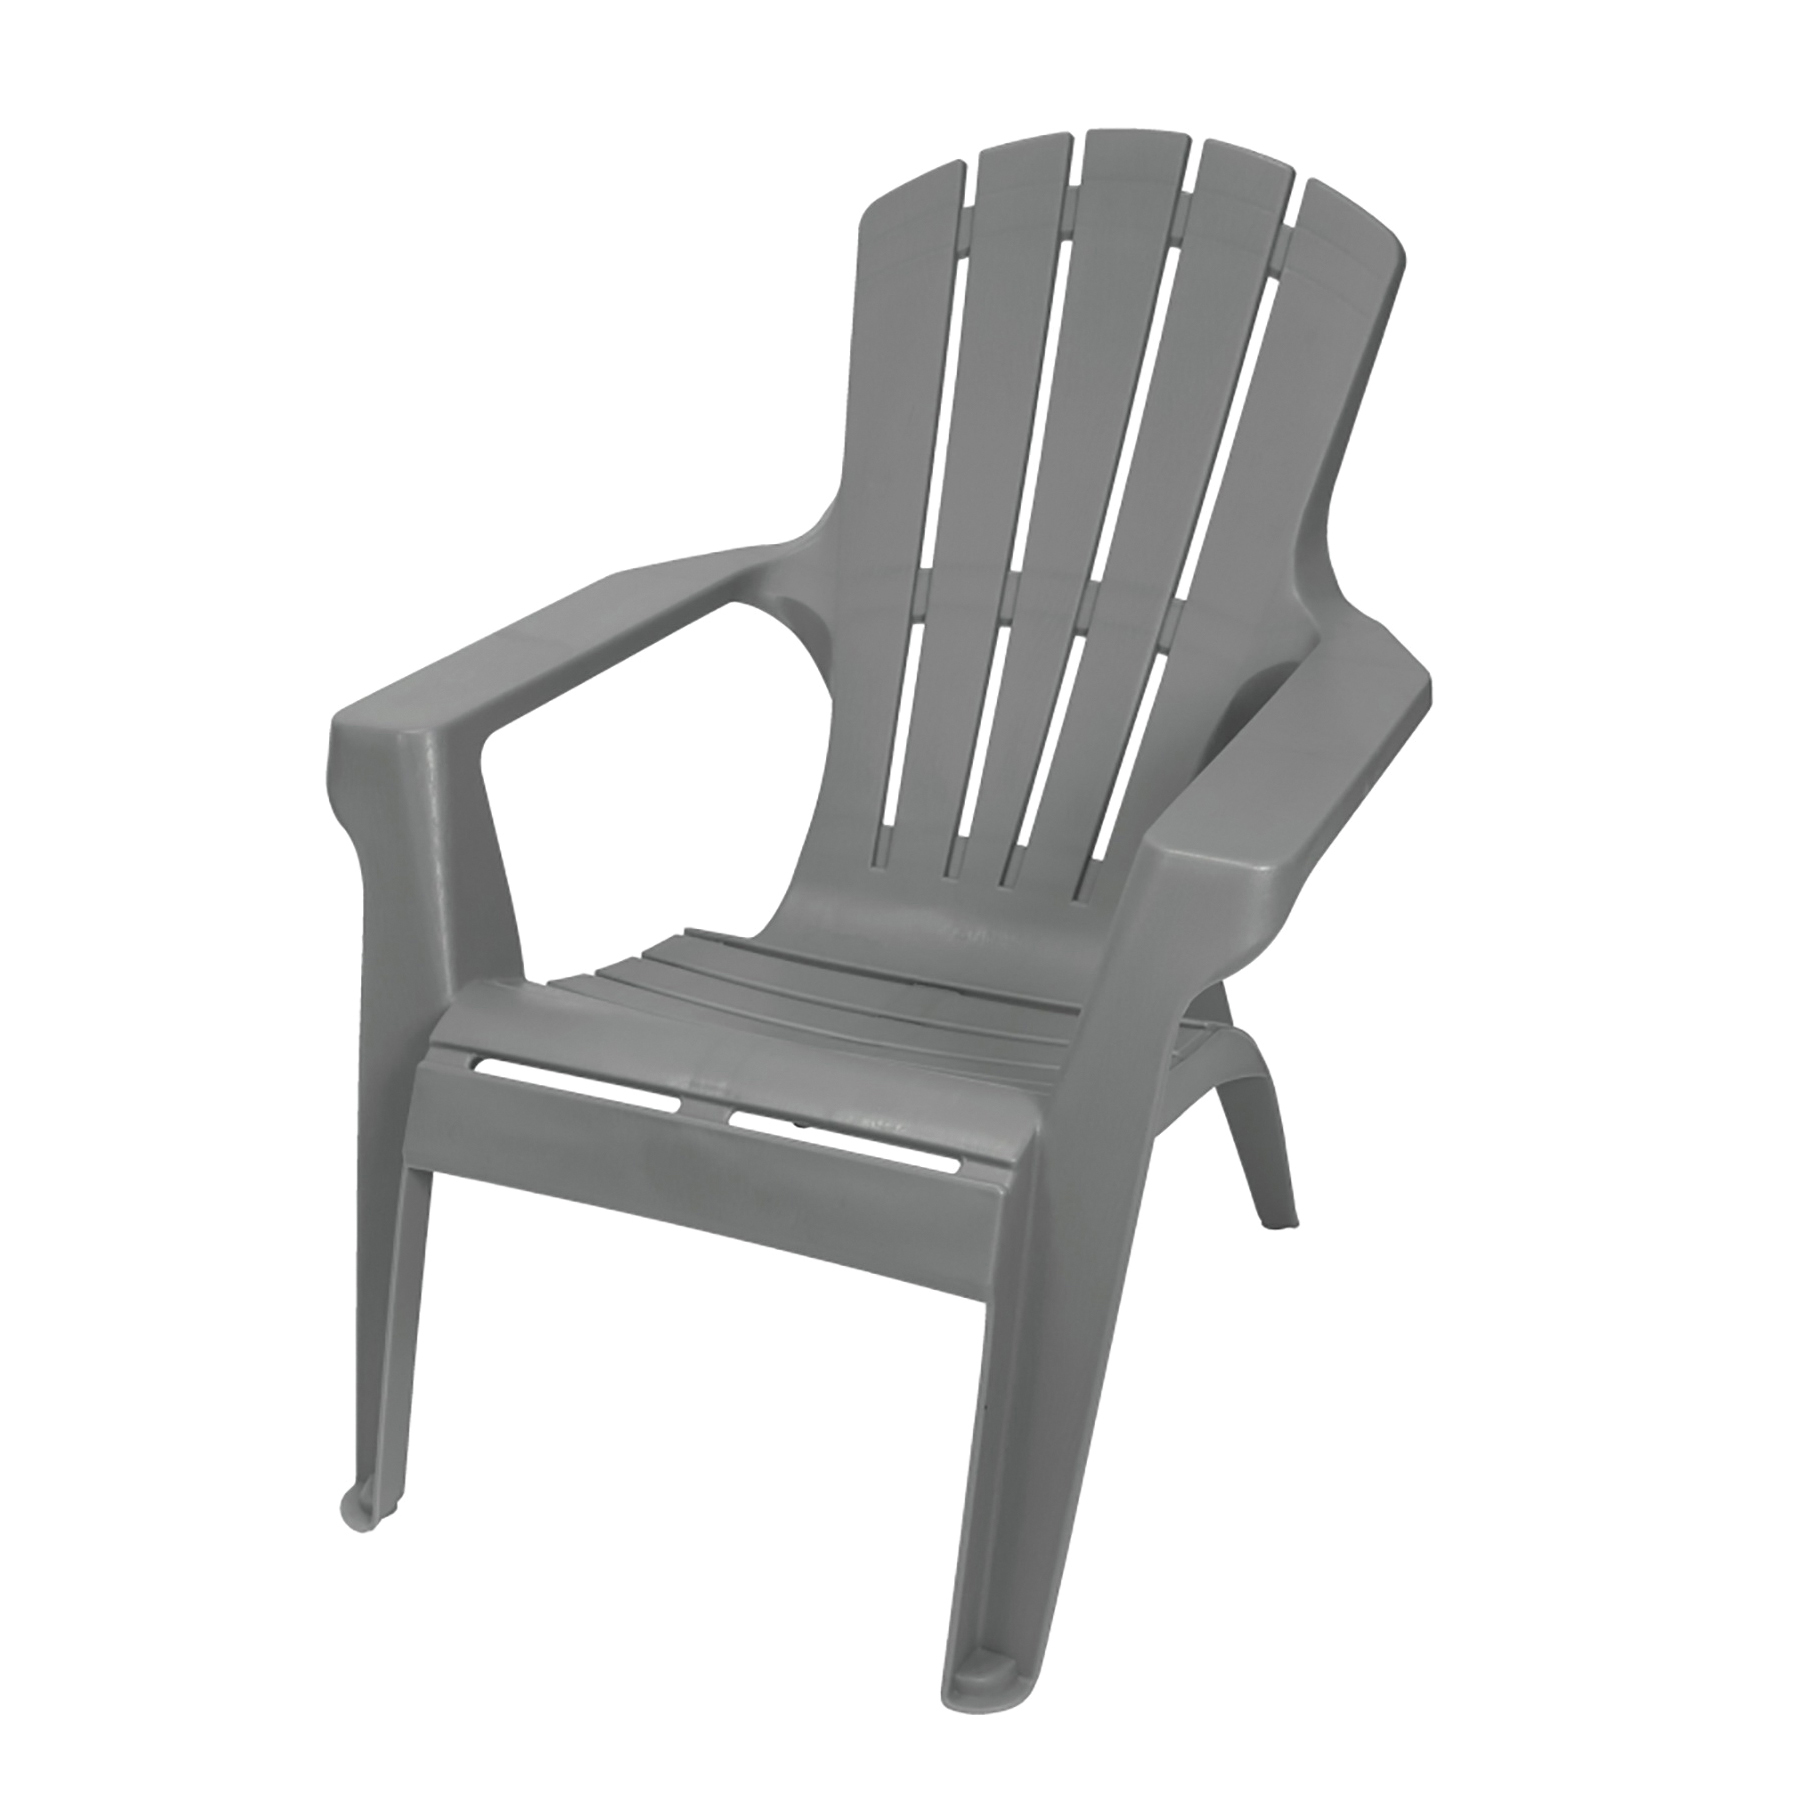 11616-26ADI Contour Adirondack Chair, Resin Seat, Resin Frame, Neutral Gray Frame